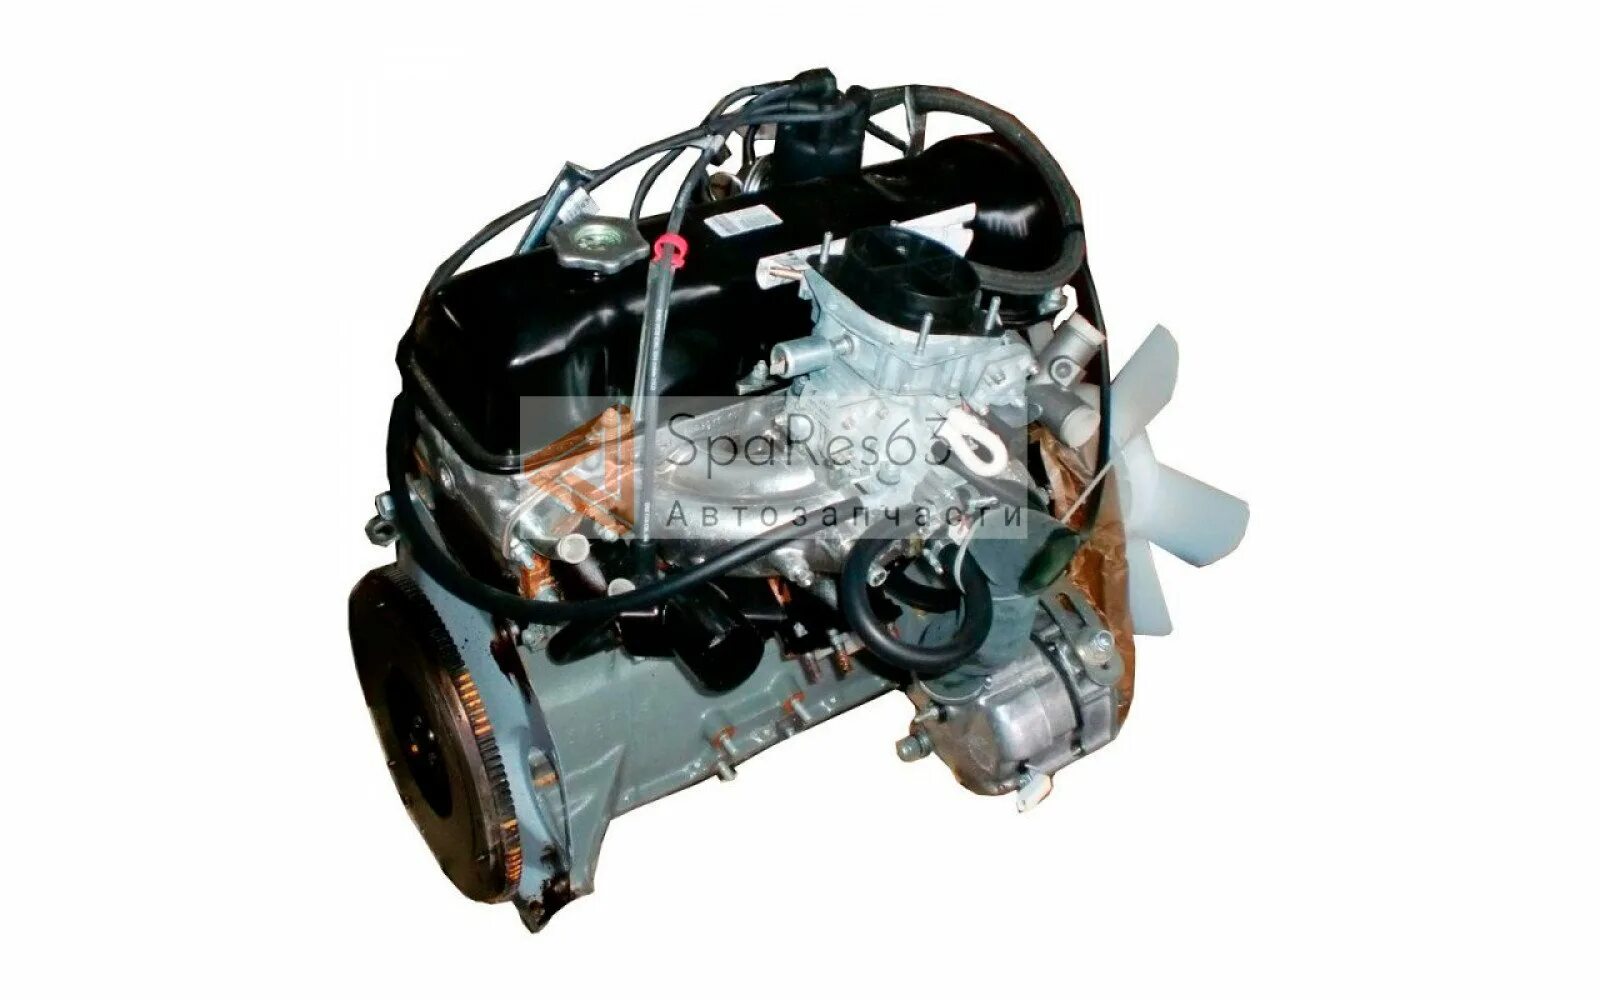 Двигатель ВАЗ 21213 1.7Л. Двигатель ВАЗ 21213 1.7. Двигатель ВАЗ Нива 1.7 карбюратор. Нива 21213 двигатель 1.7.